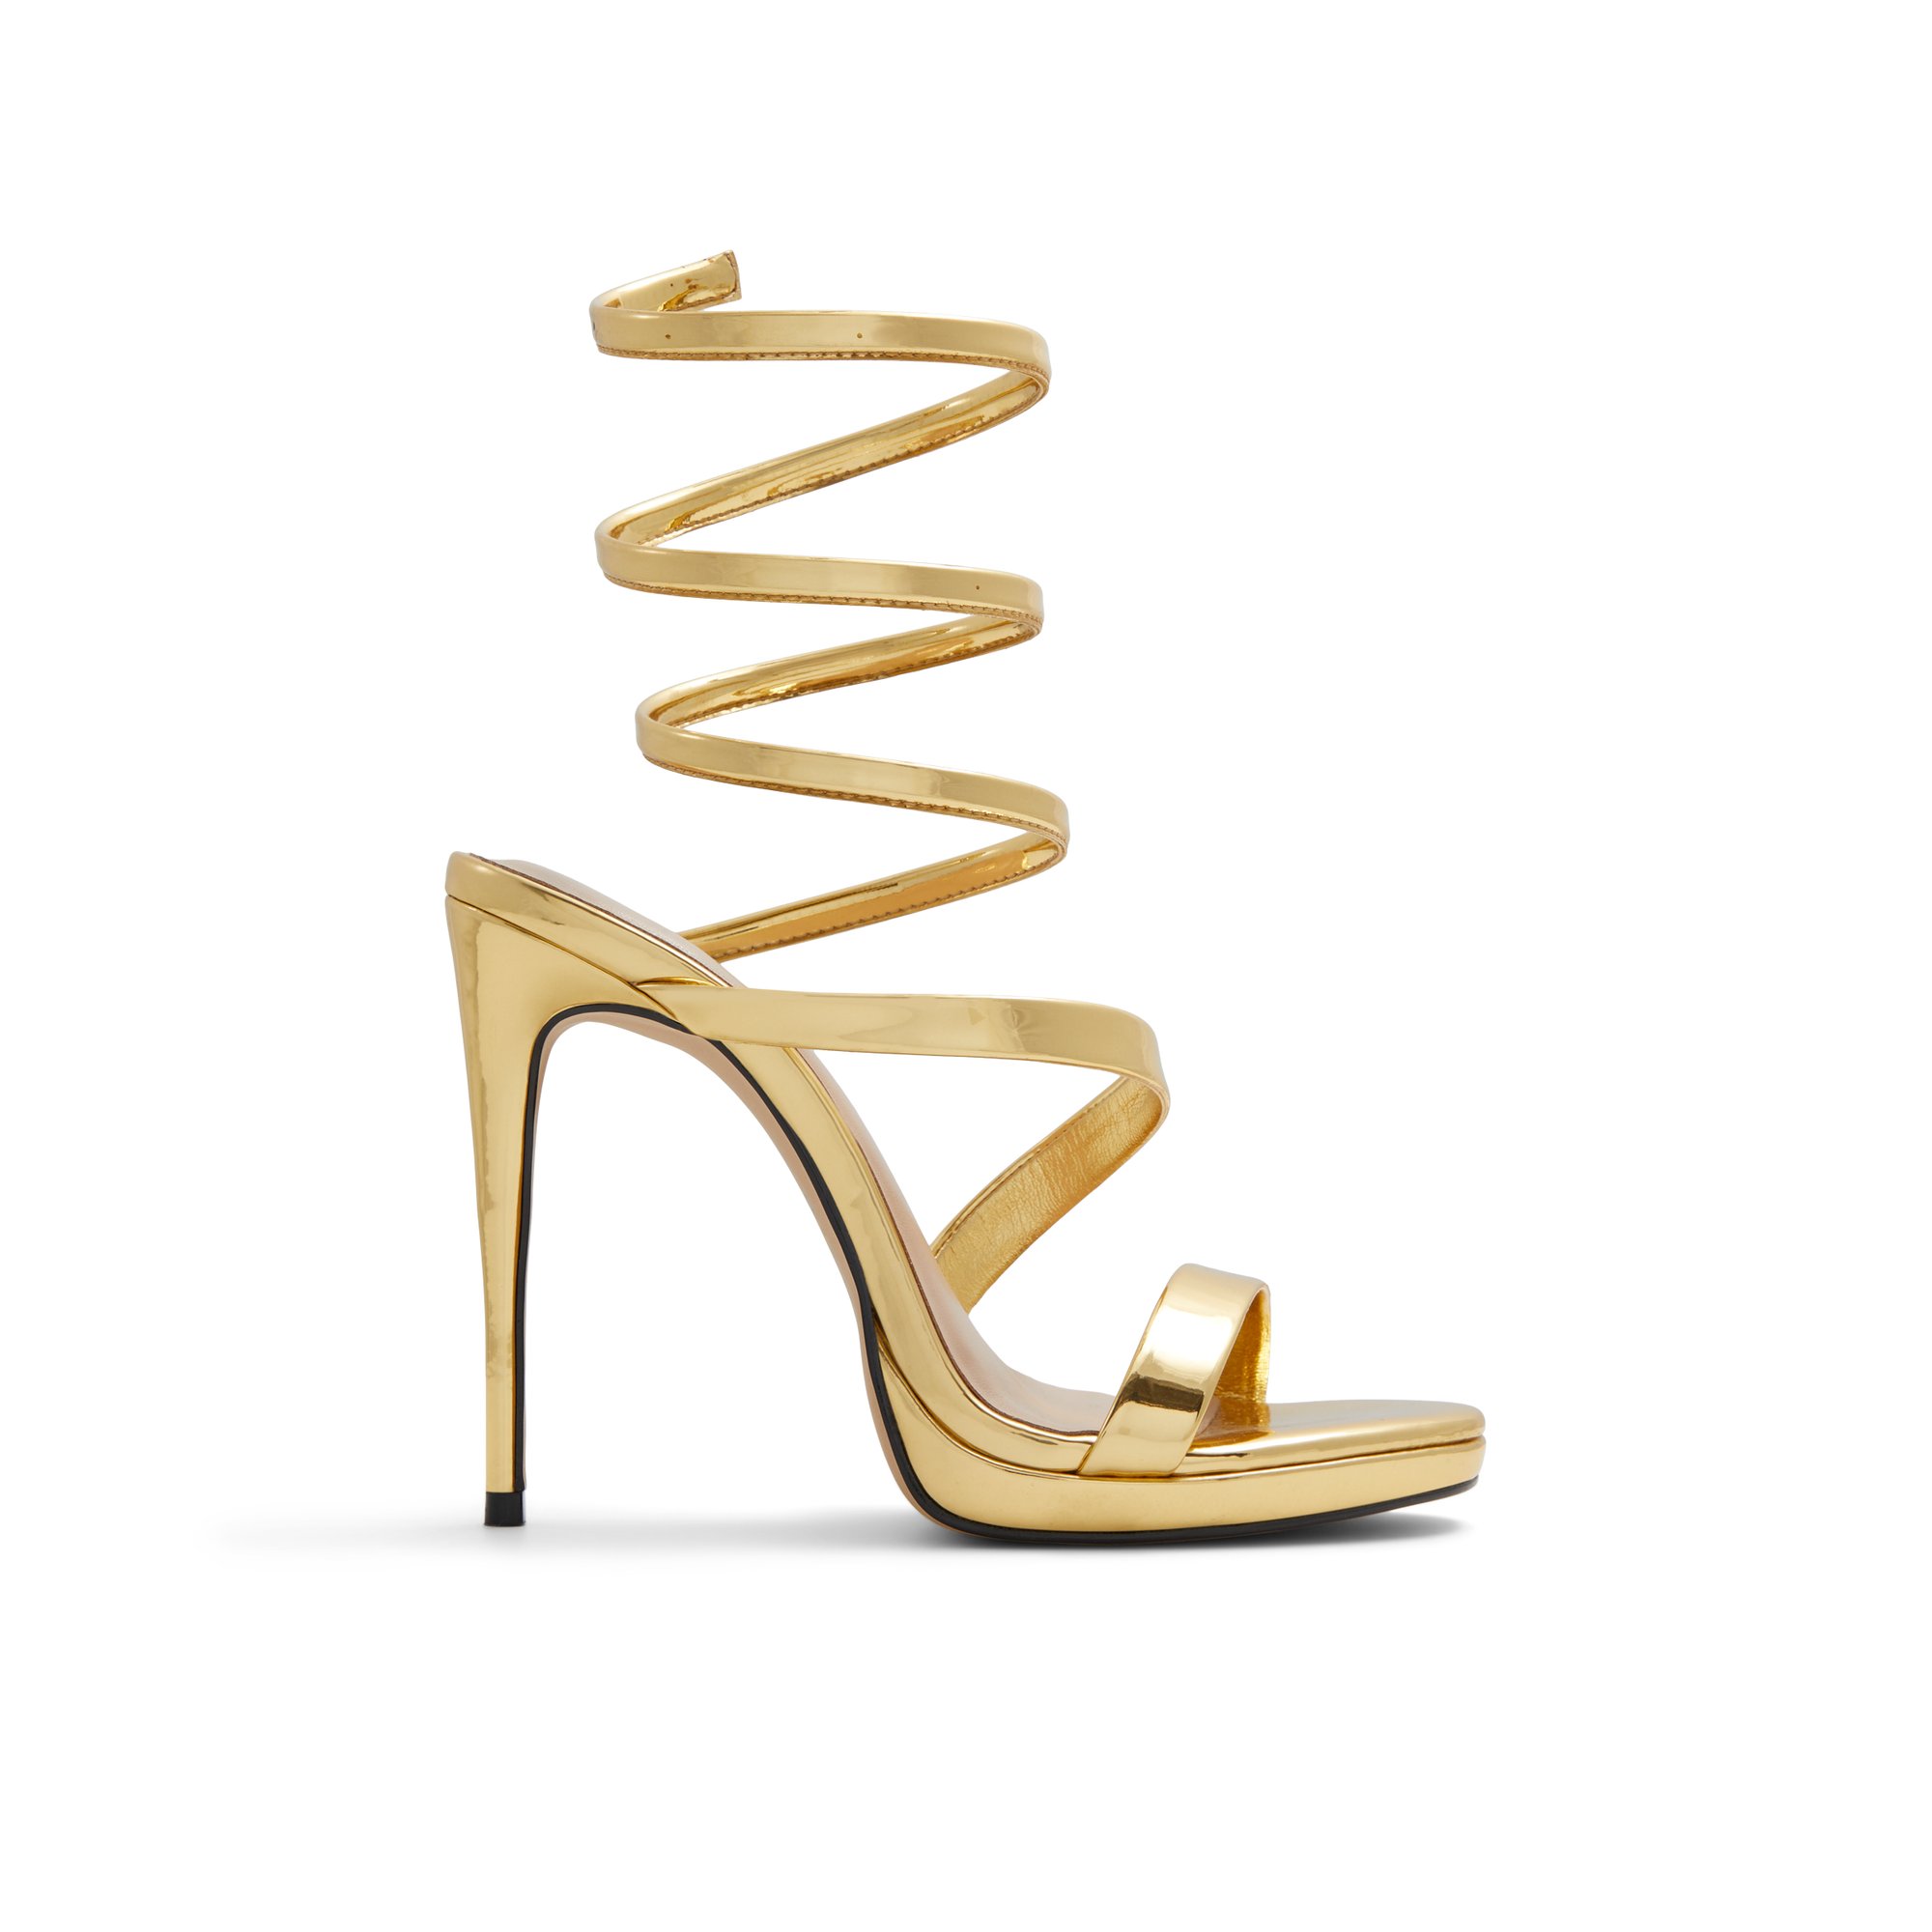 ALDO Katswirl - Women's Strappy Sandal Sandals - Gold